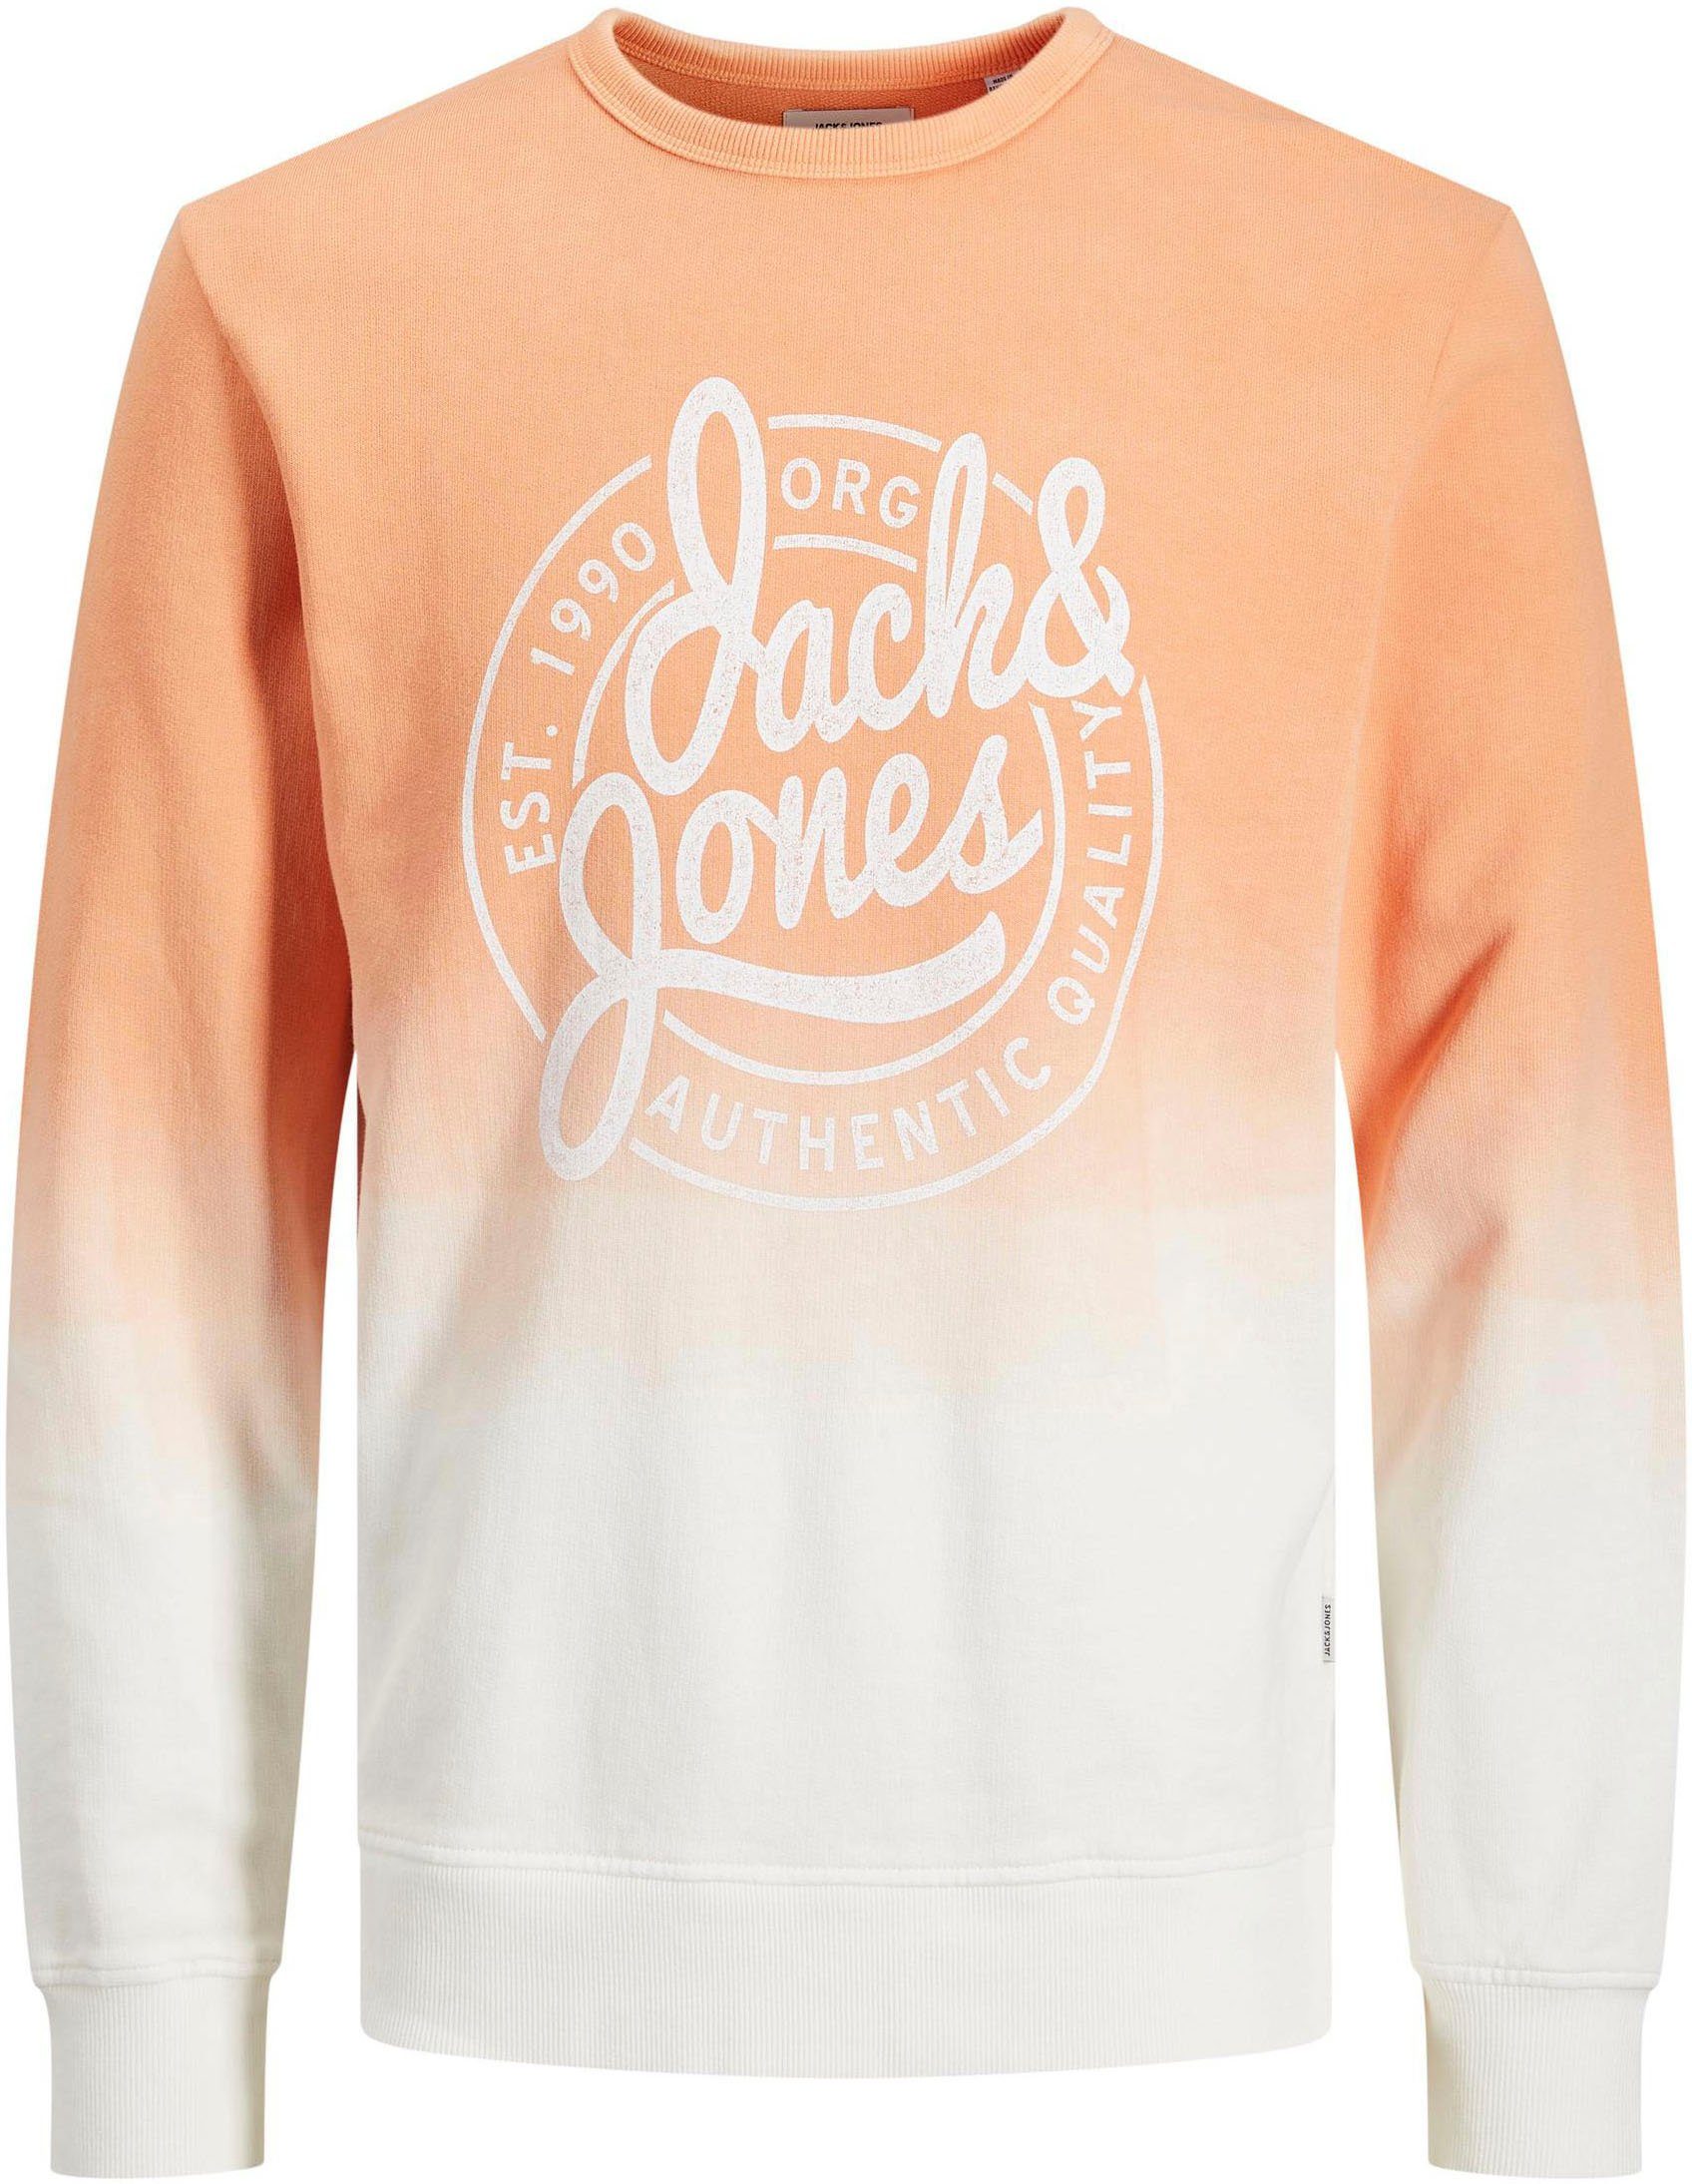 Kinder Teens (Gr. 128 - 182) Jack & Jones Junior Sweatshirt mit Farbverlauf